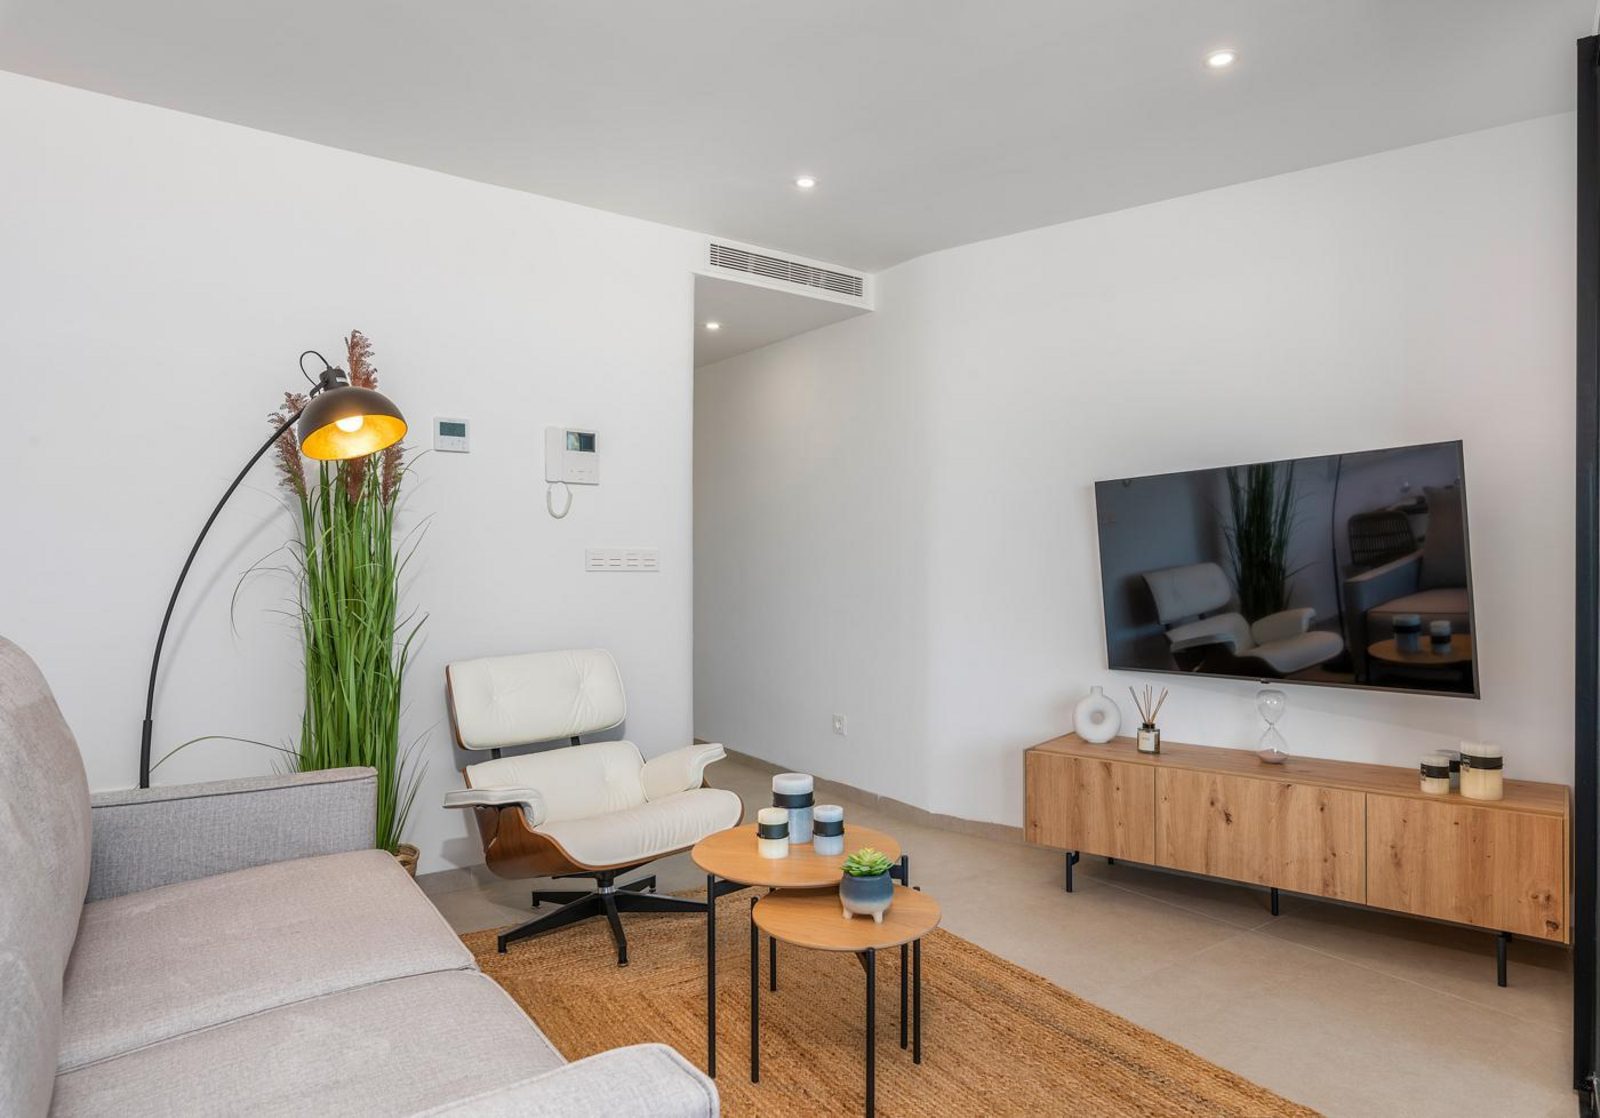 Spacious beach apartment with seaview Costa Calida